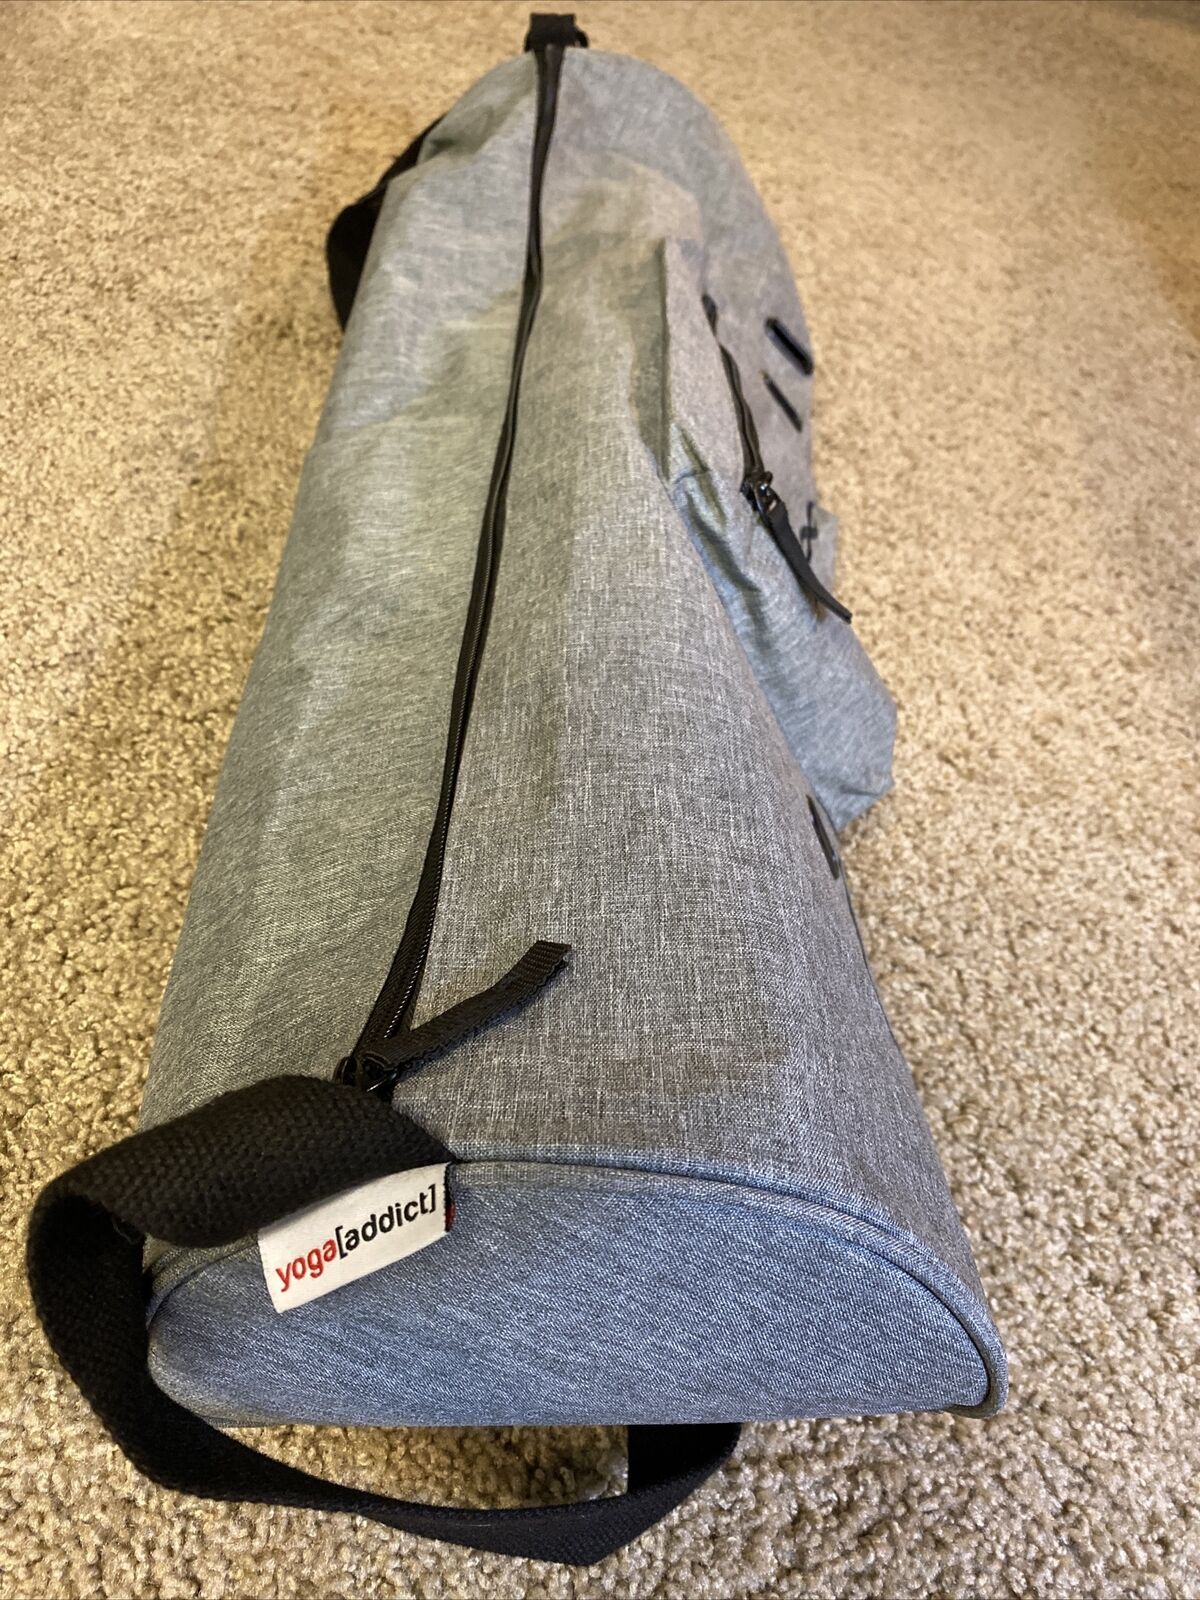 Yoga Addict Classy Breathable Yoga Mat Carrier Backpack 28”x 10”